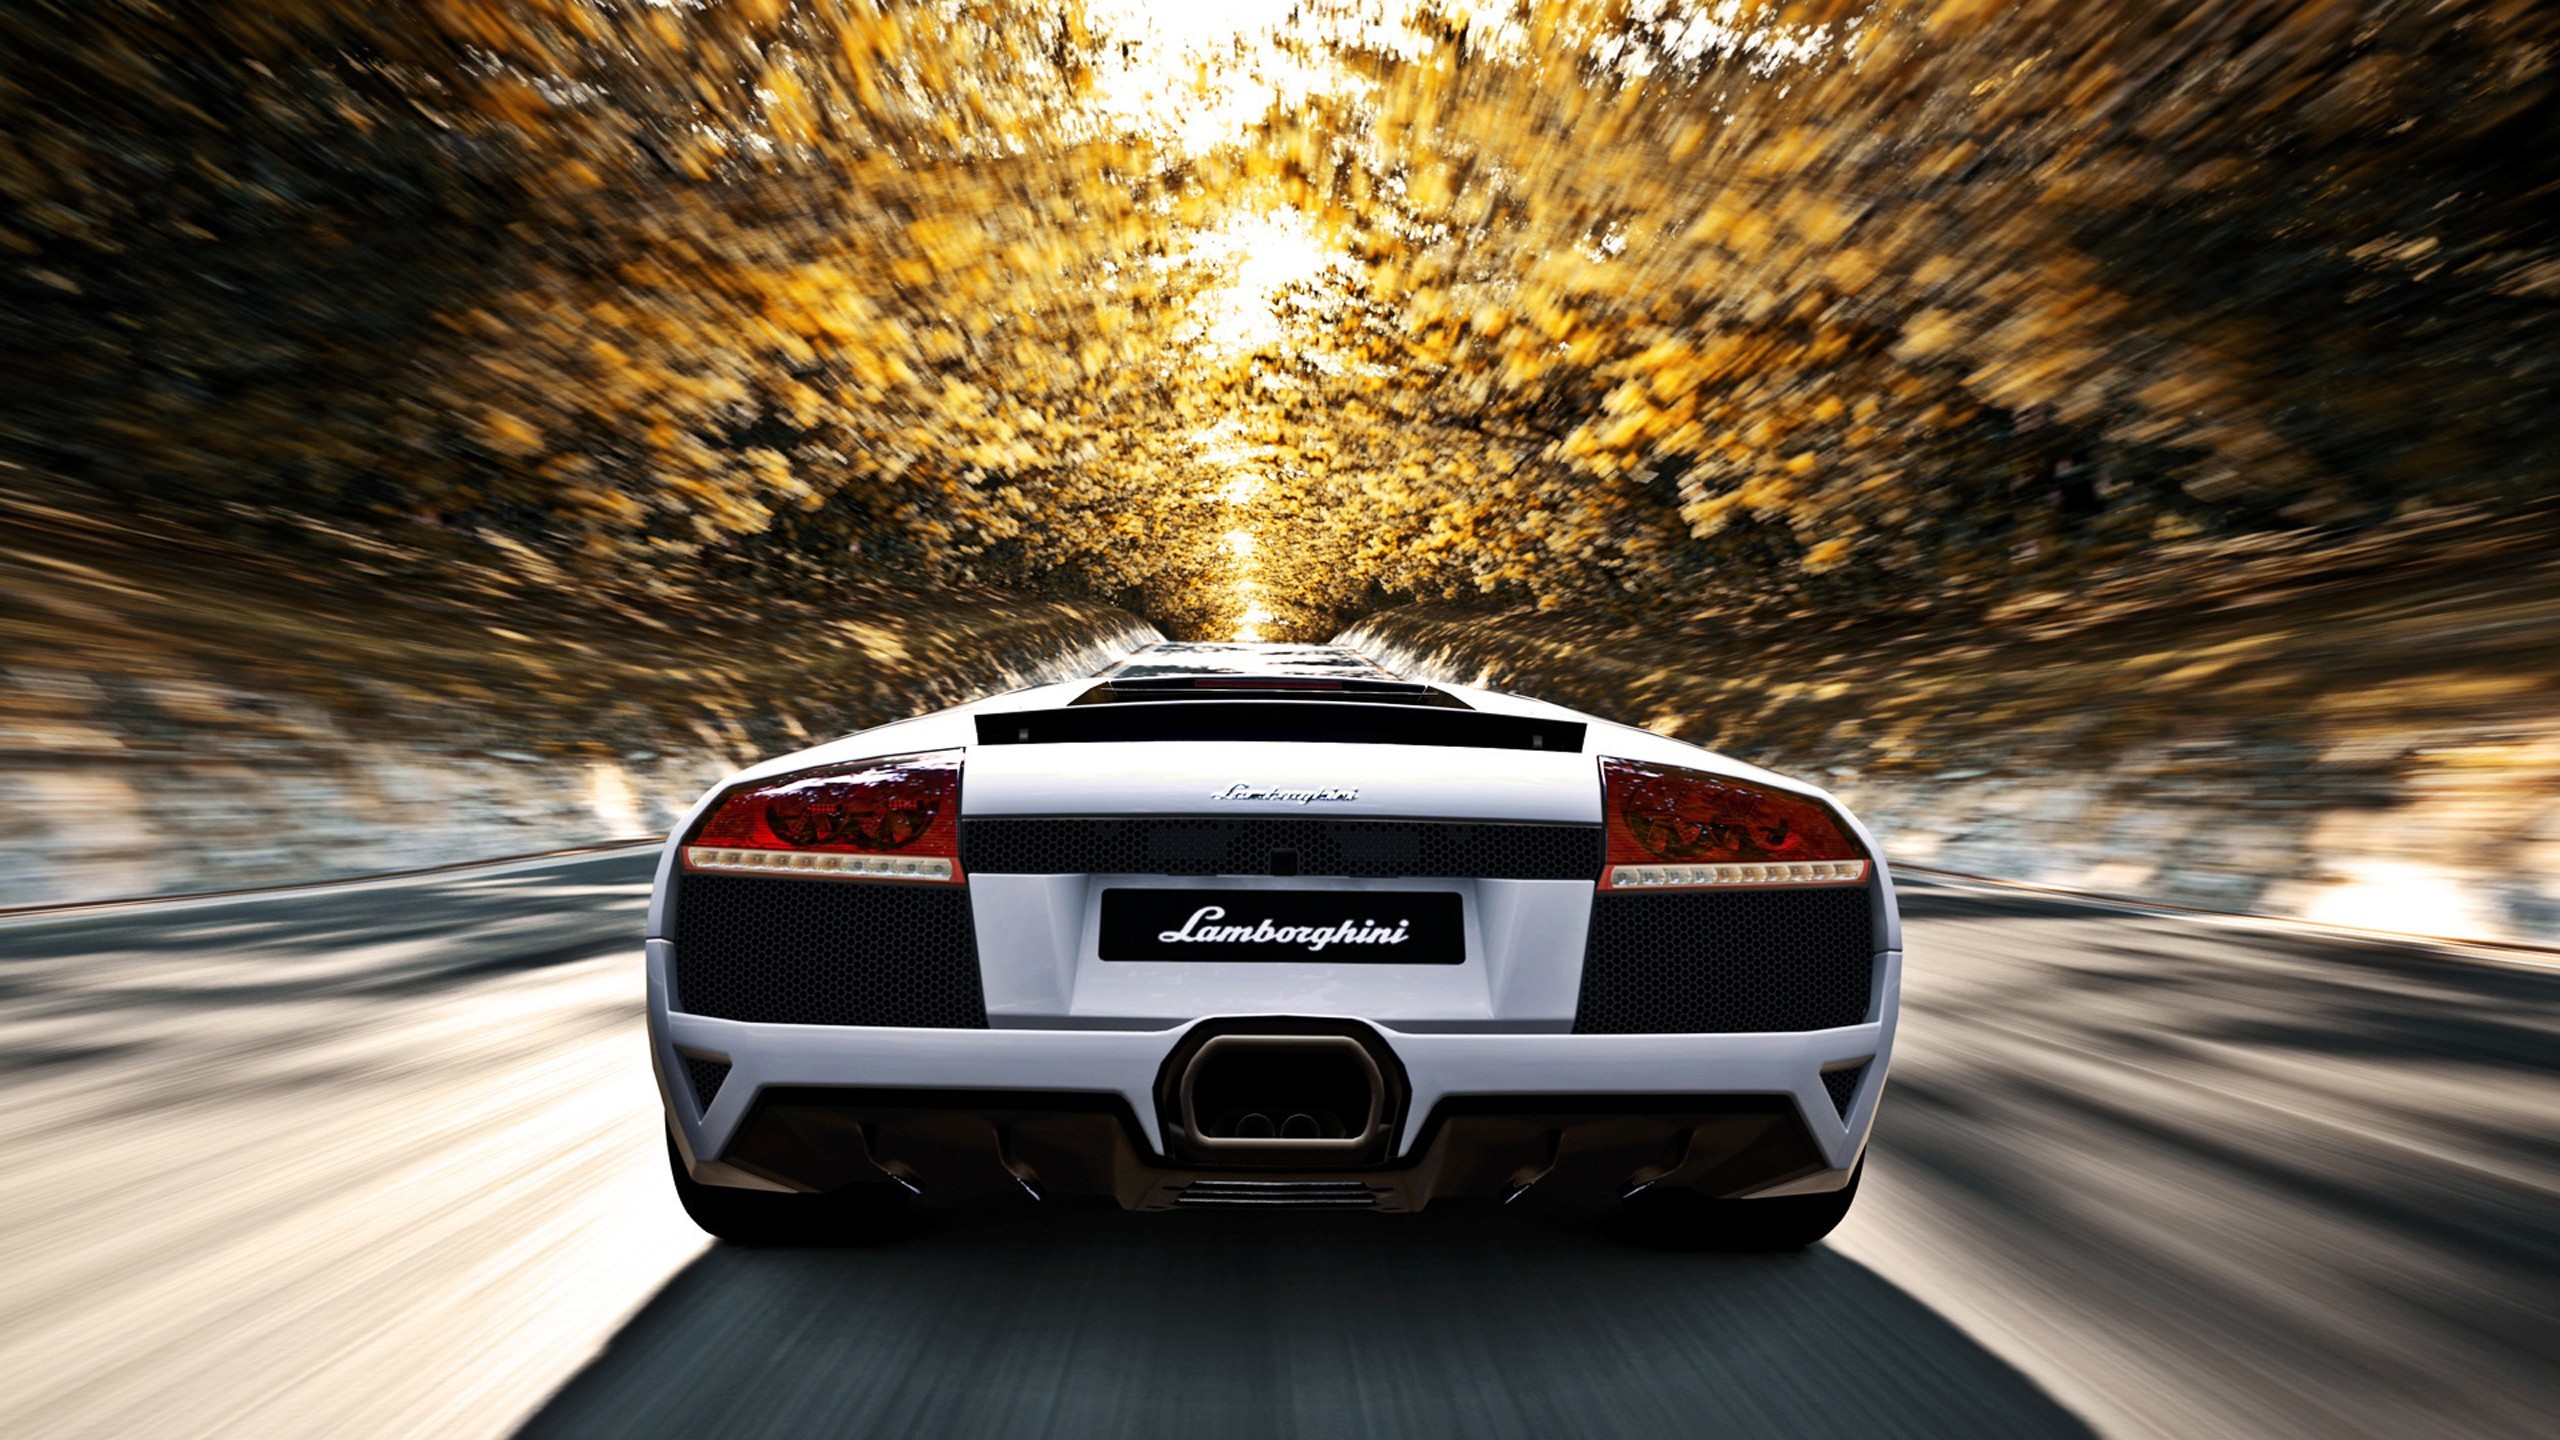 General 2560x1440 trees car Lamborghini depth of field motion blur road Lamborghini Murcielago